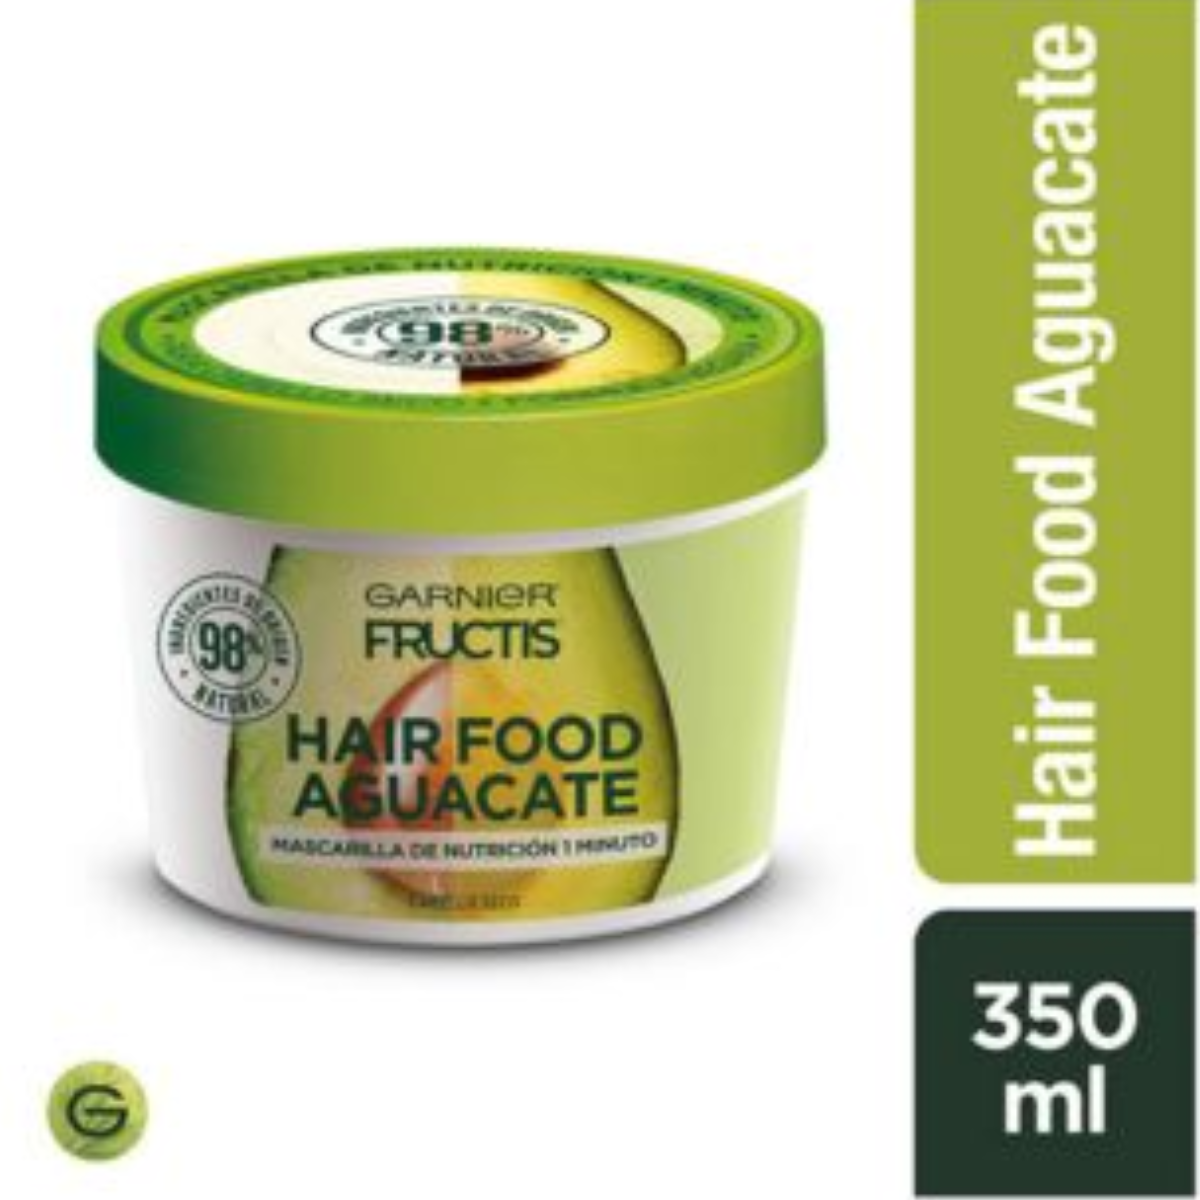 mascarilla garnier hair food aguacate 350 ml Comprar en tienda onlineshoppingcenterg Colombia centro de compras en linea osc